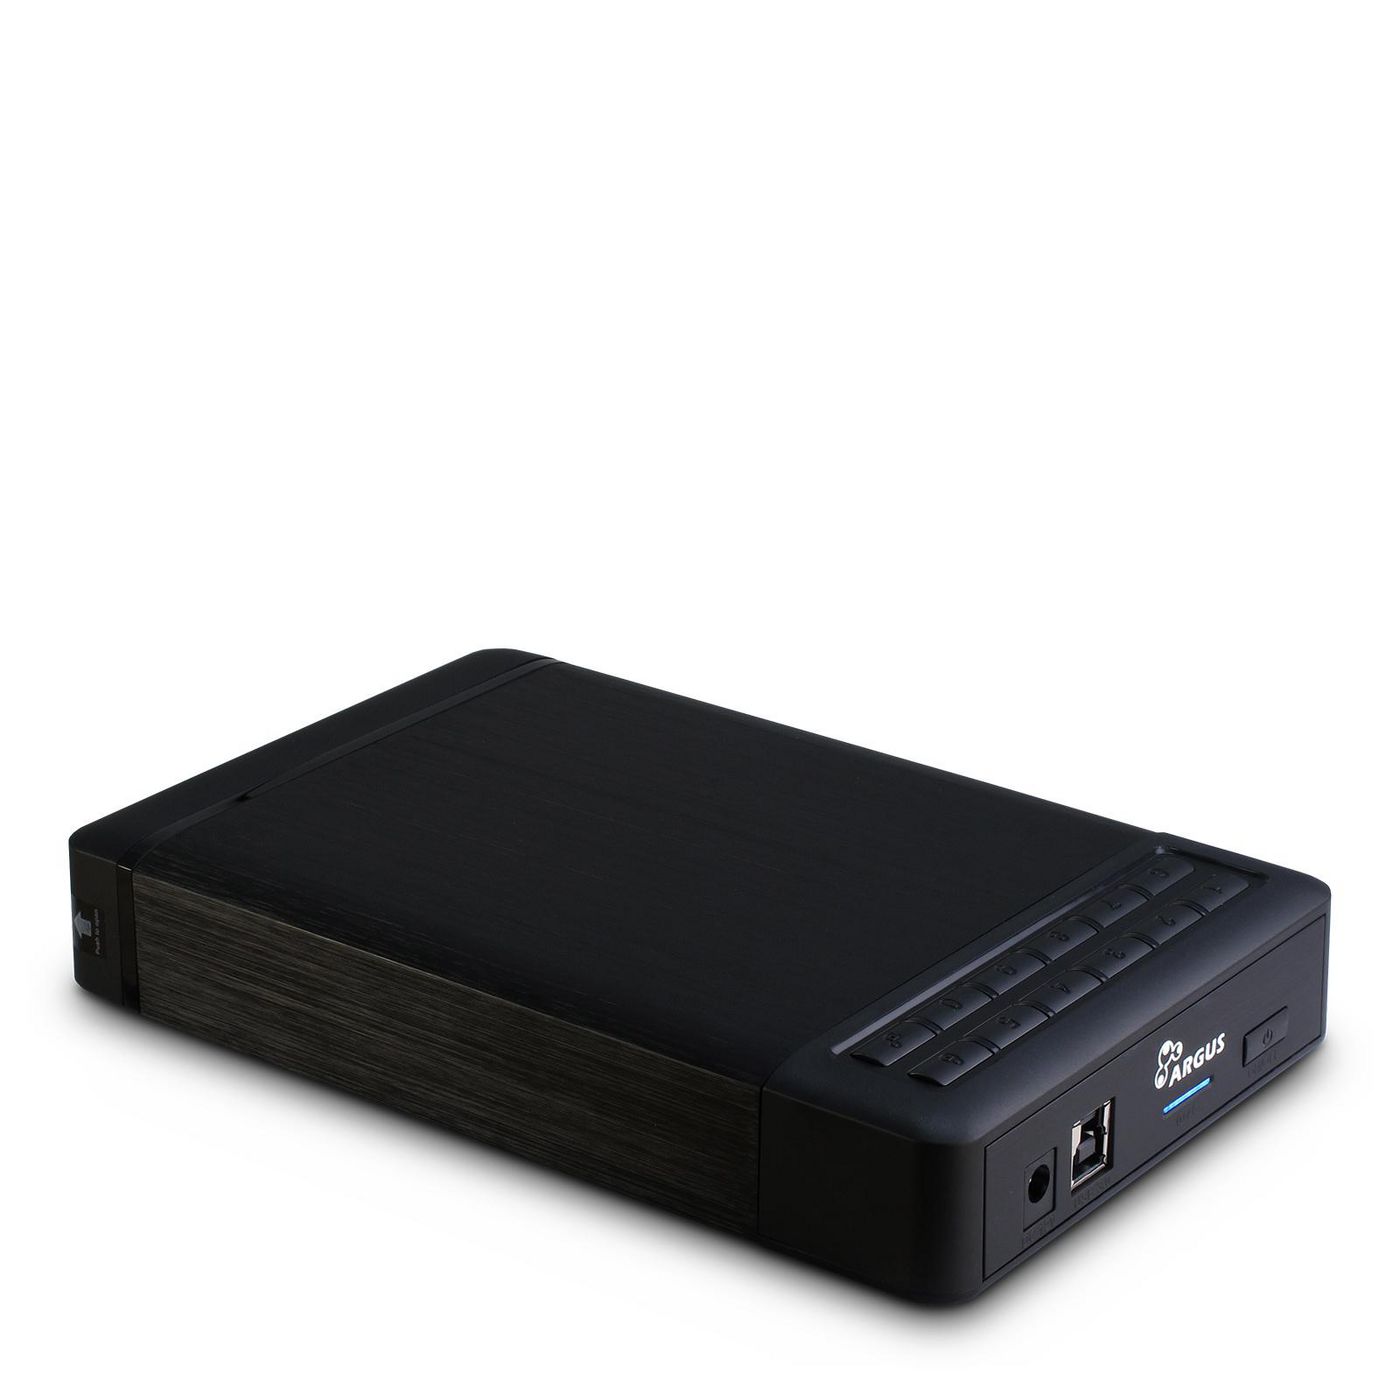 INTERTECH Dockingstation Inter-Tech GD-35LK01 black USB3.0 m. Code